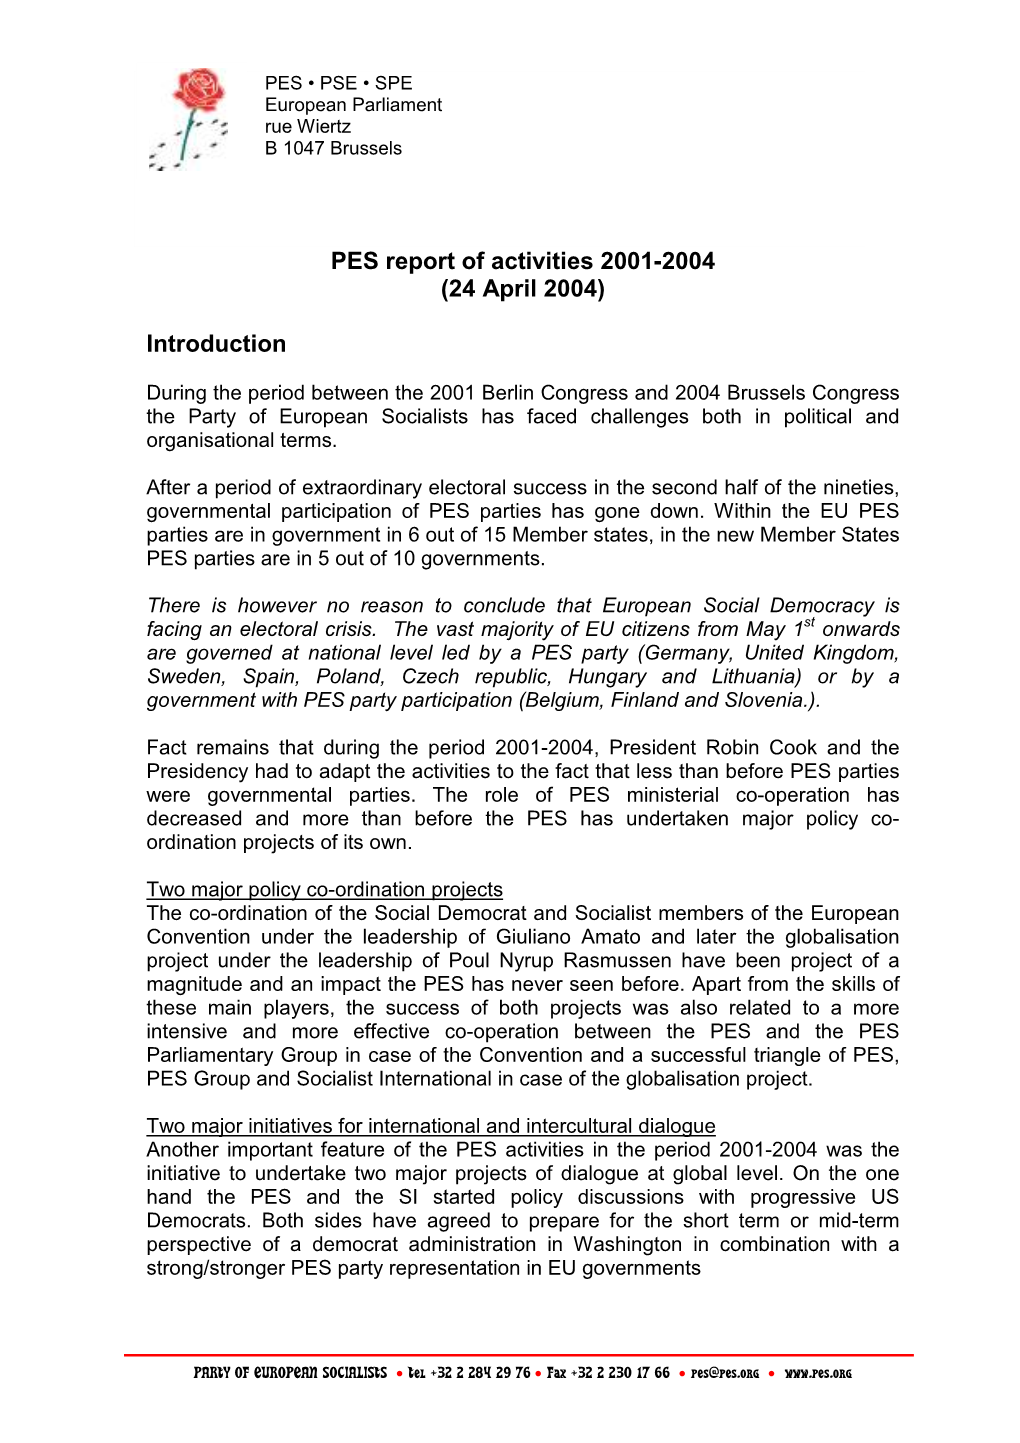 PES Report of Activities 2001-2004 (24 April 2004)